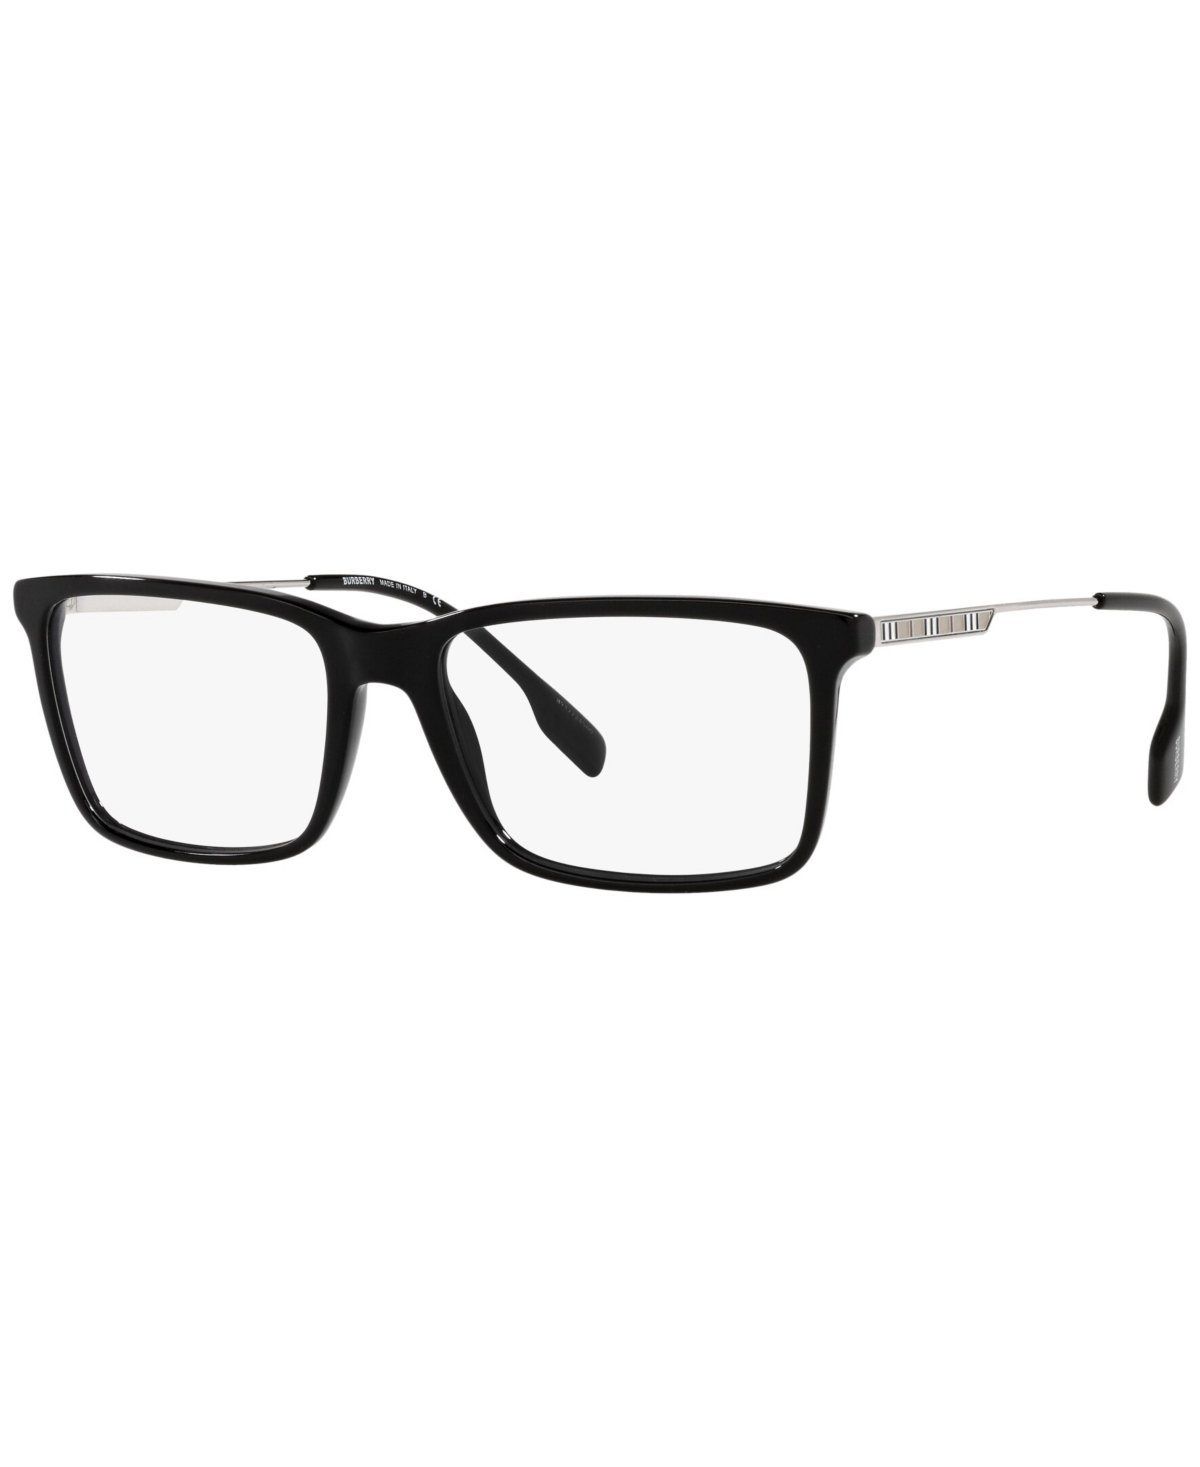 BE2339F Men's Rectangle Low Bridge Fit Eyeglasses - Black